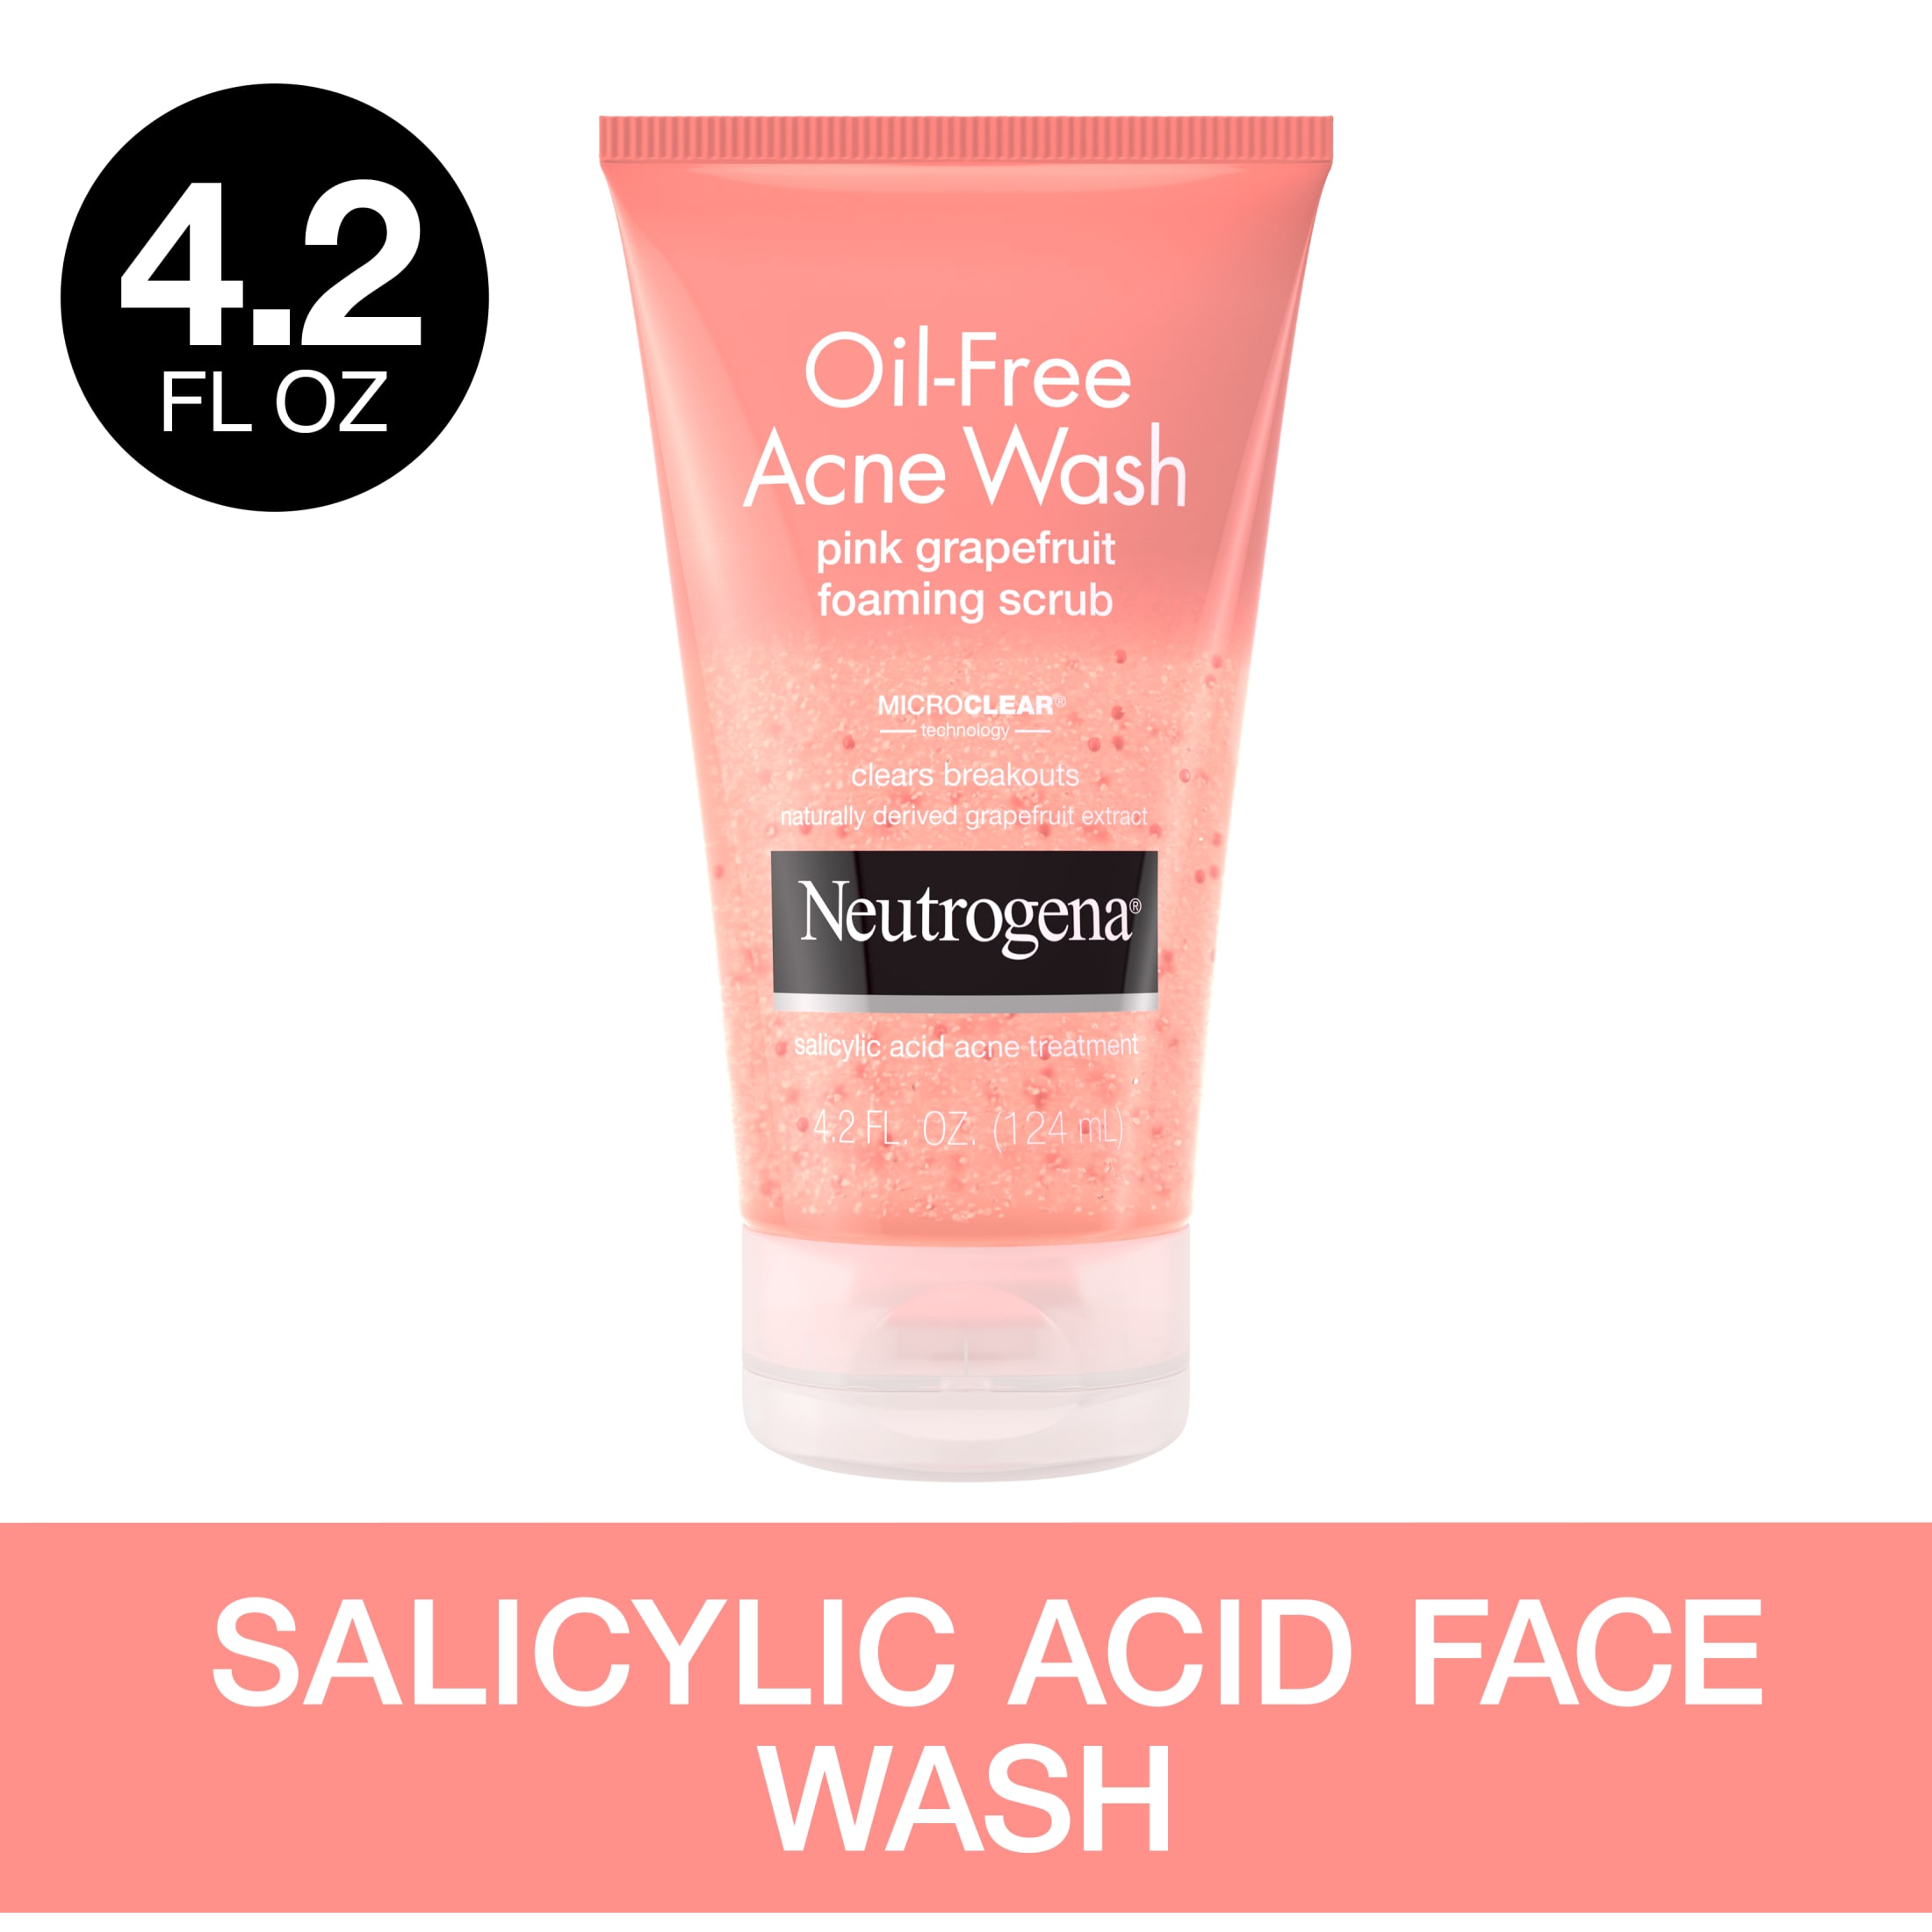 Neutrogena Oil-Free Acne Wash Pink Grapefruit Facial Scrub, 4.2 fl. oz - image 1 of 11